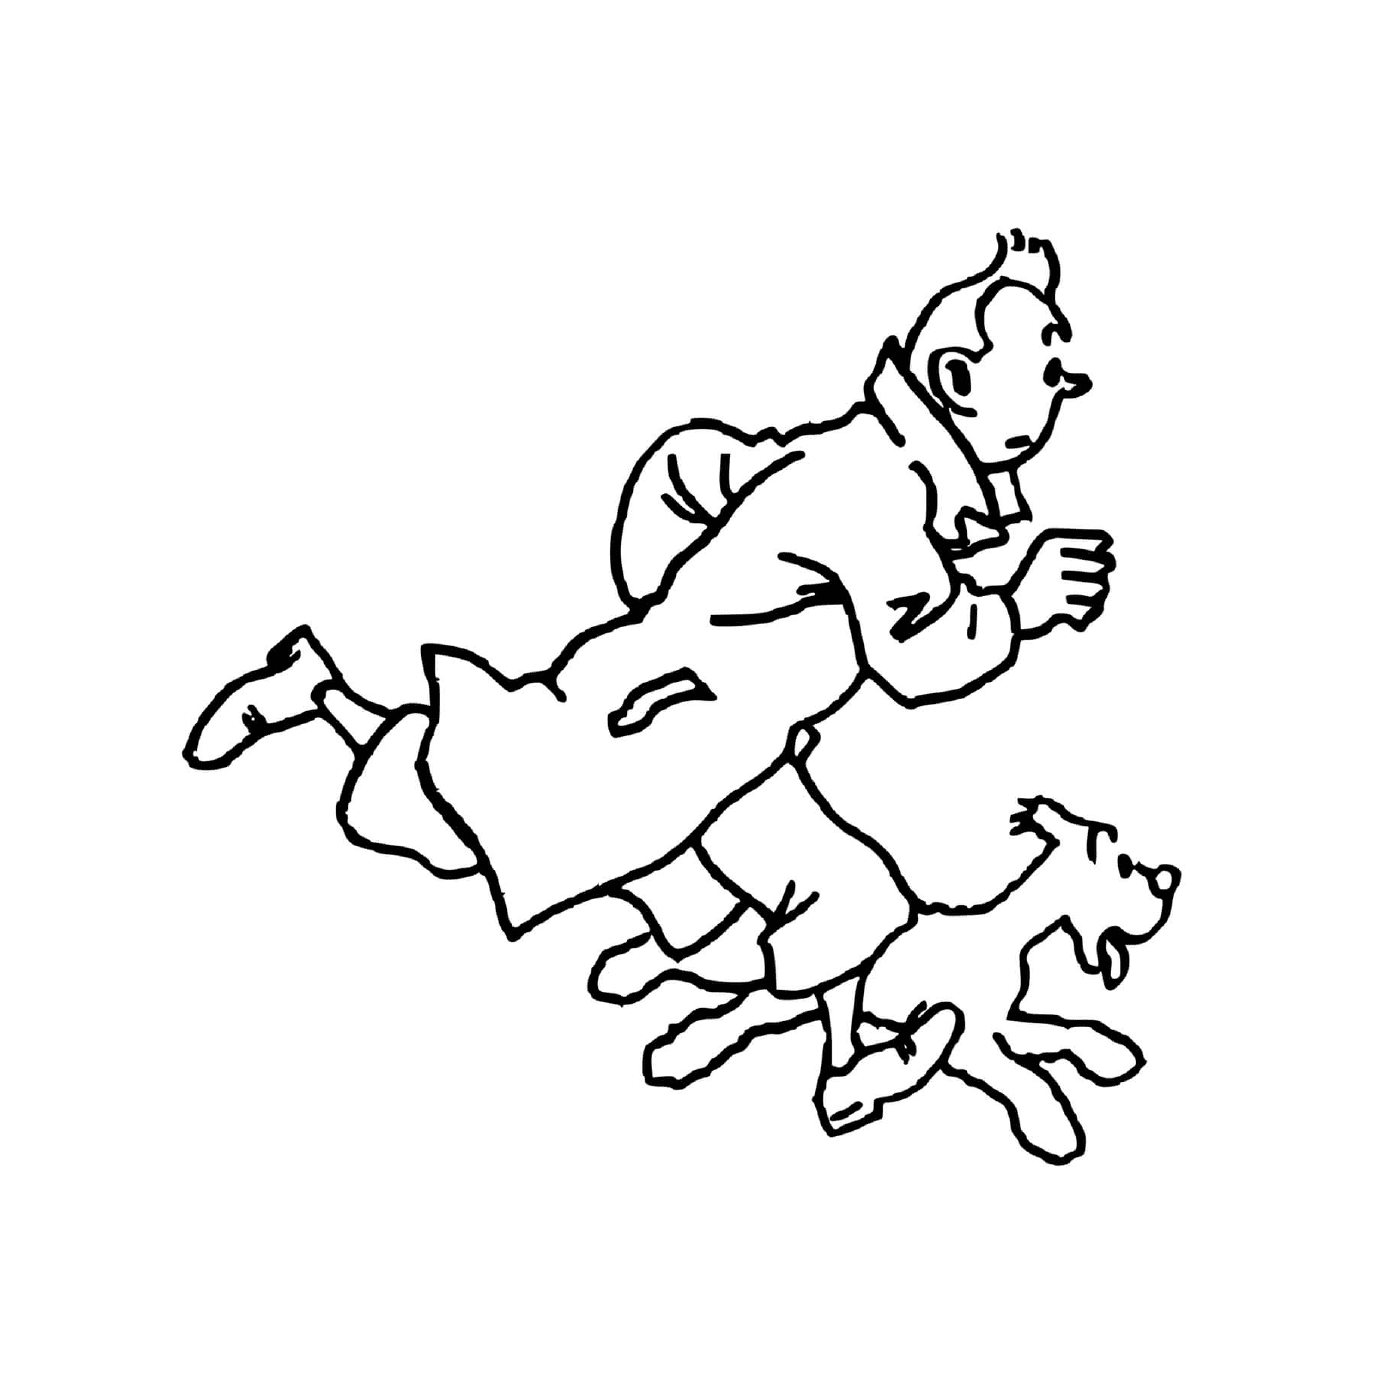  Tintin and Milou run fast 